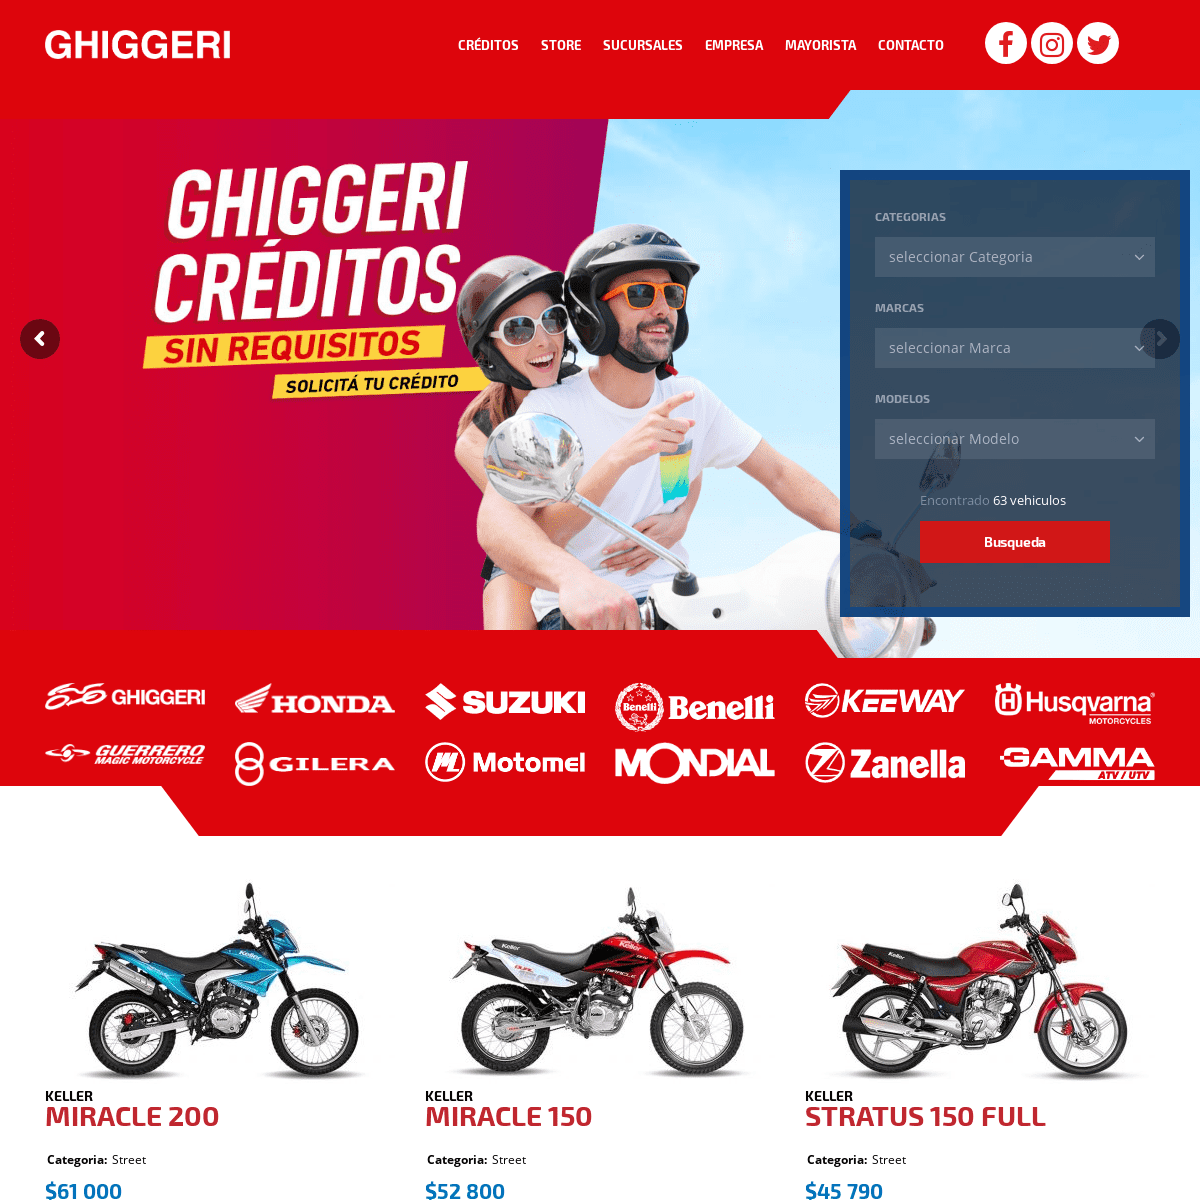 A complete backup of ghiggeri.com